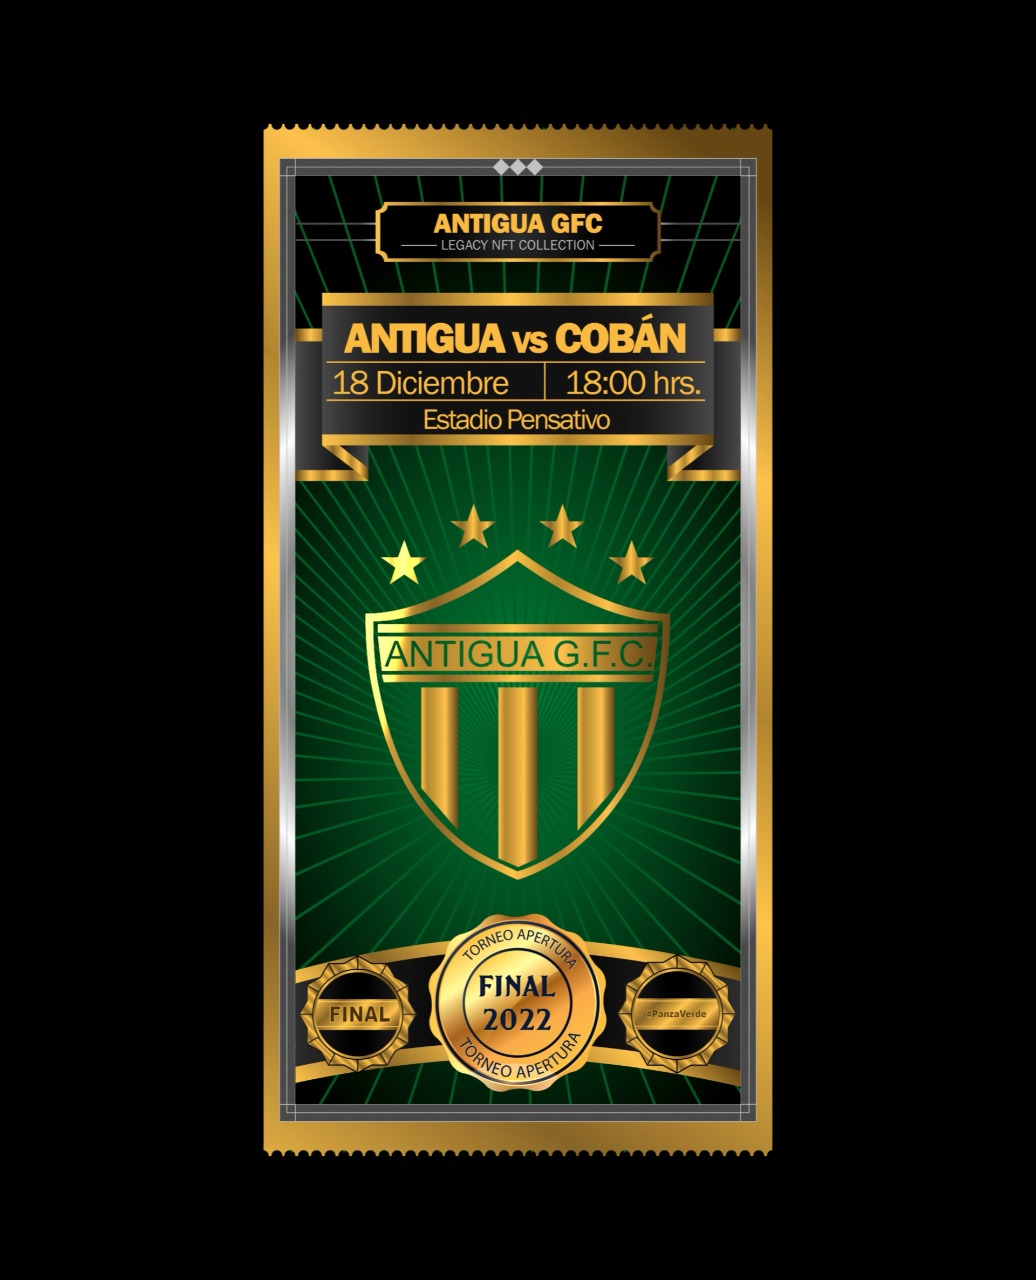 Antigua GFC - Ticket Conmemorativo Antigua vs Coban asset